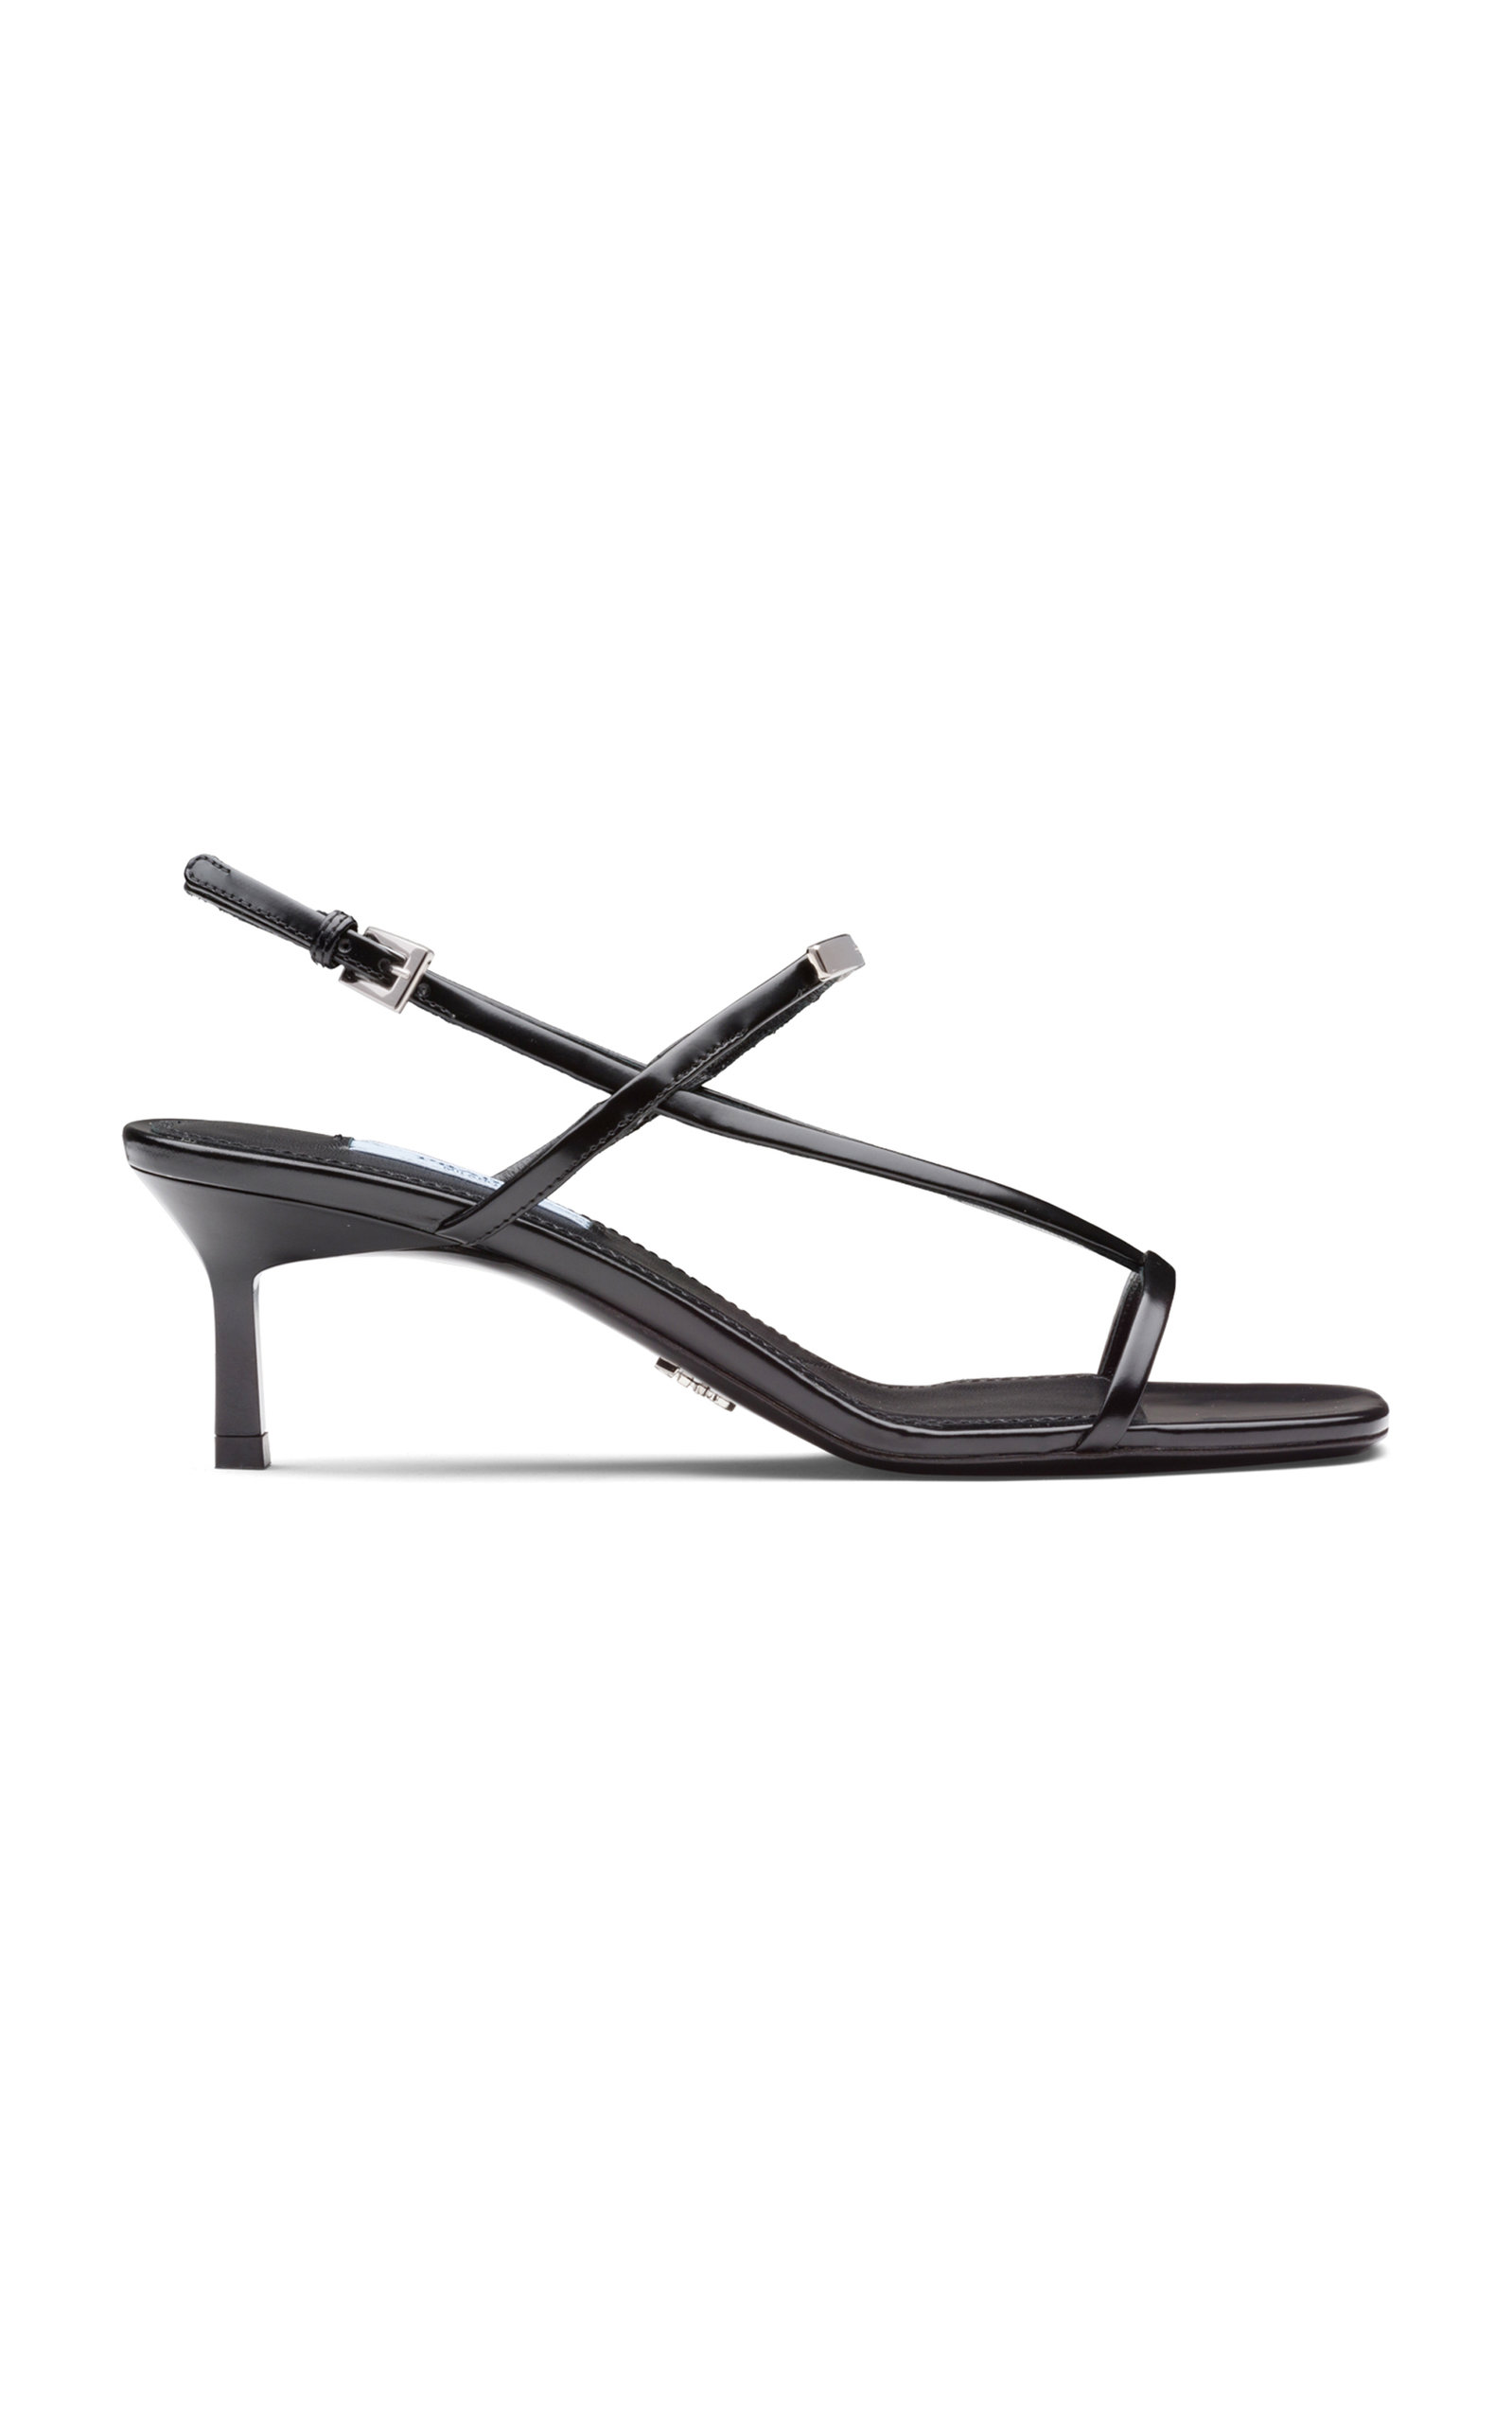 Prada - Women's Brushed Leather Slingback Sandals - Black - IT 37 - Moda Operandi